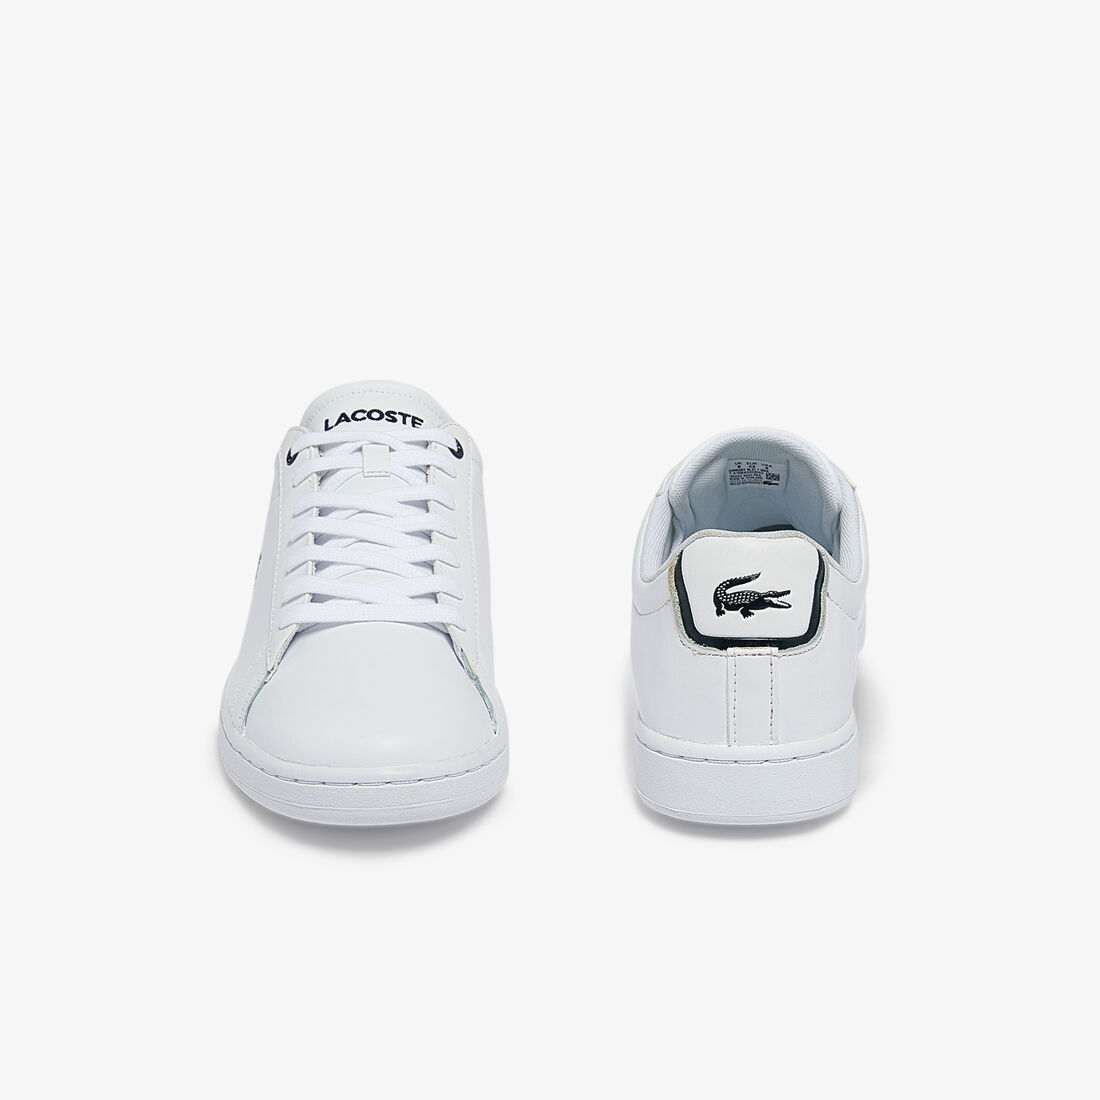 Lacoste Carnaby Bl Leder Sneakers Herren Weiß Navy | CVIN-06412